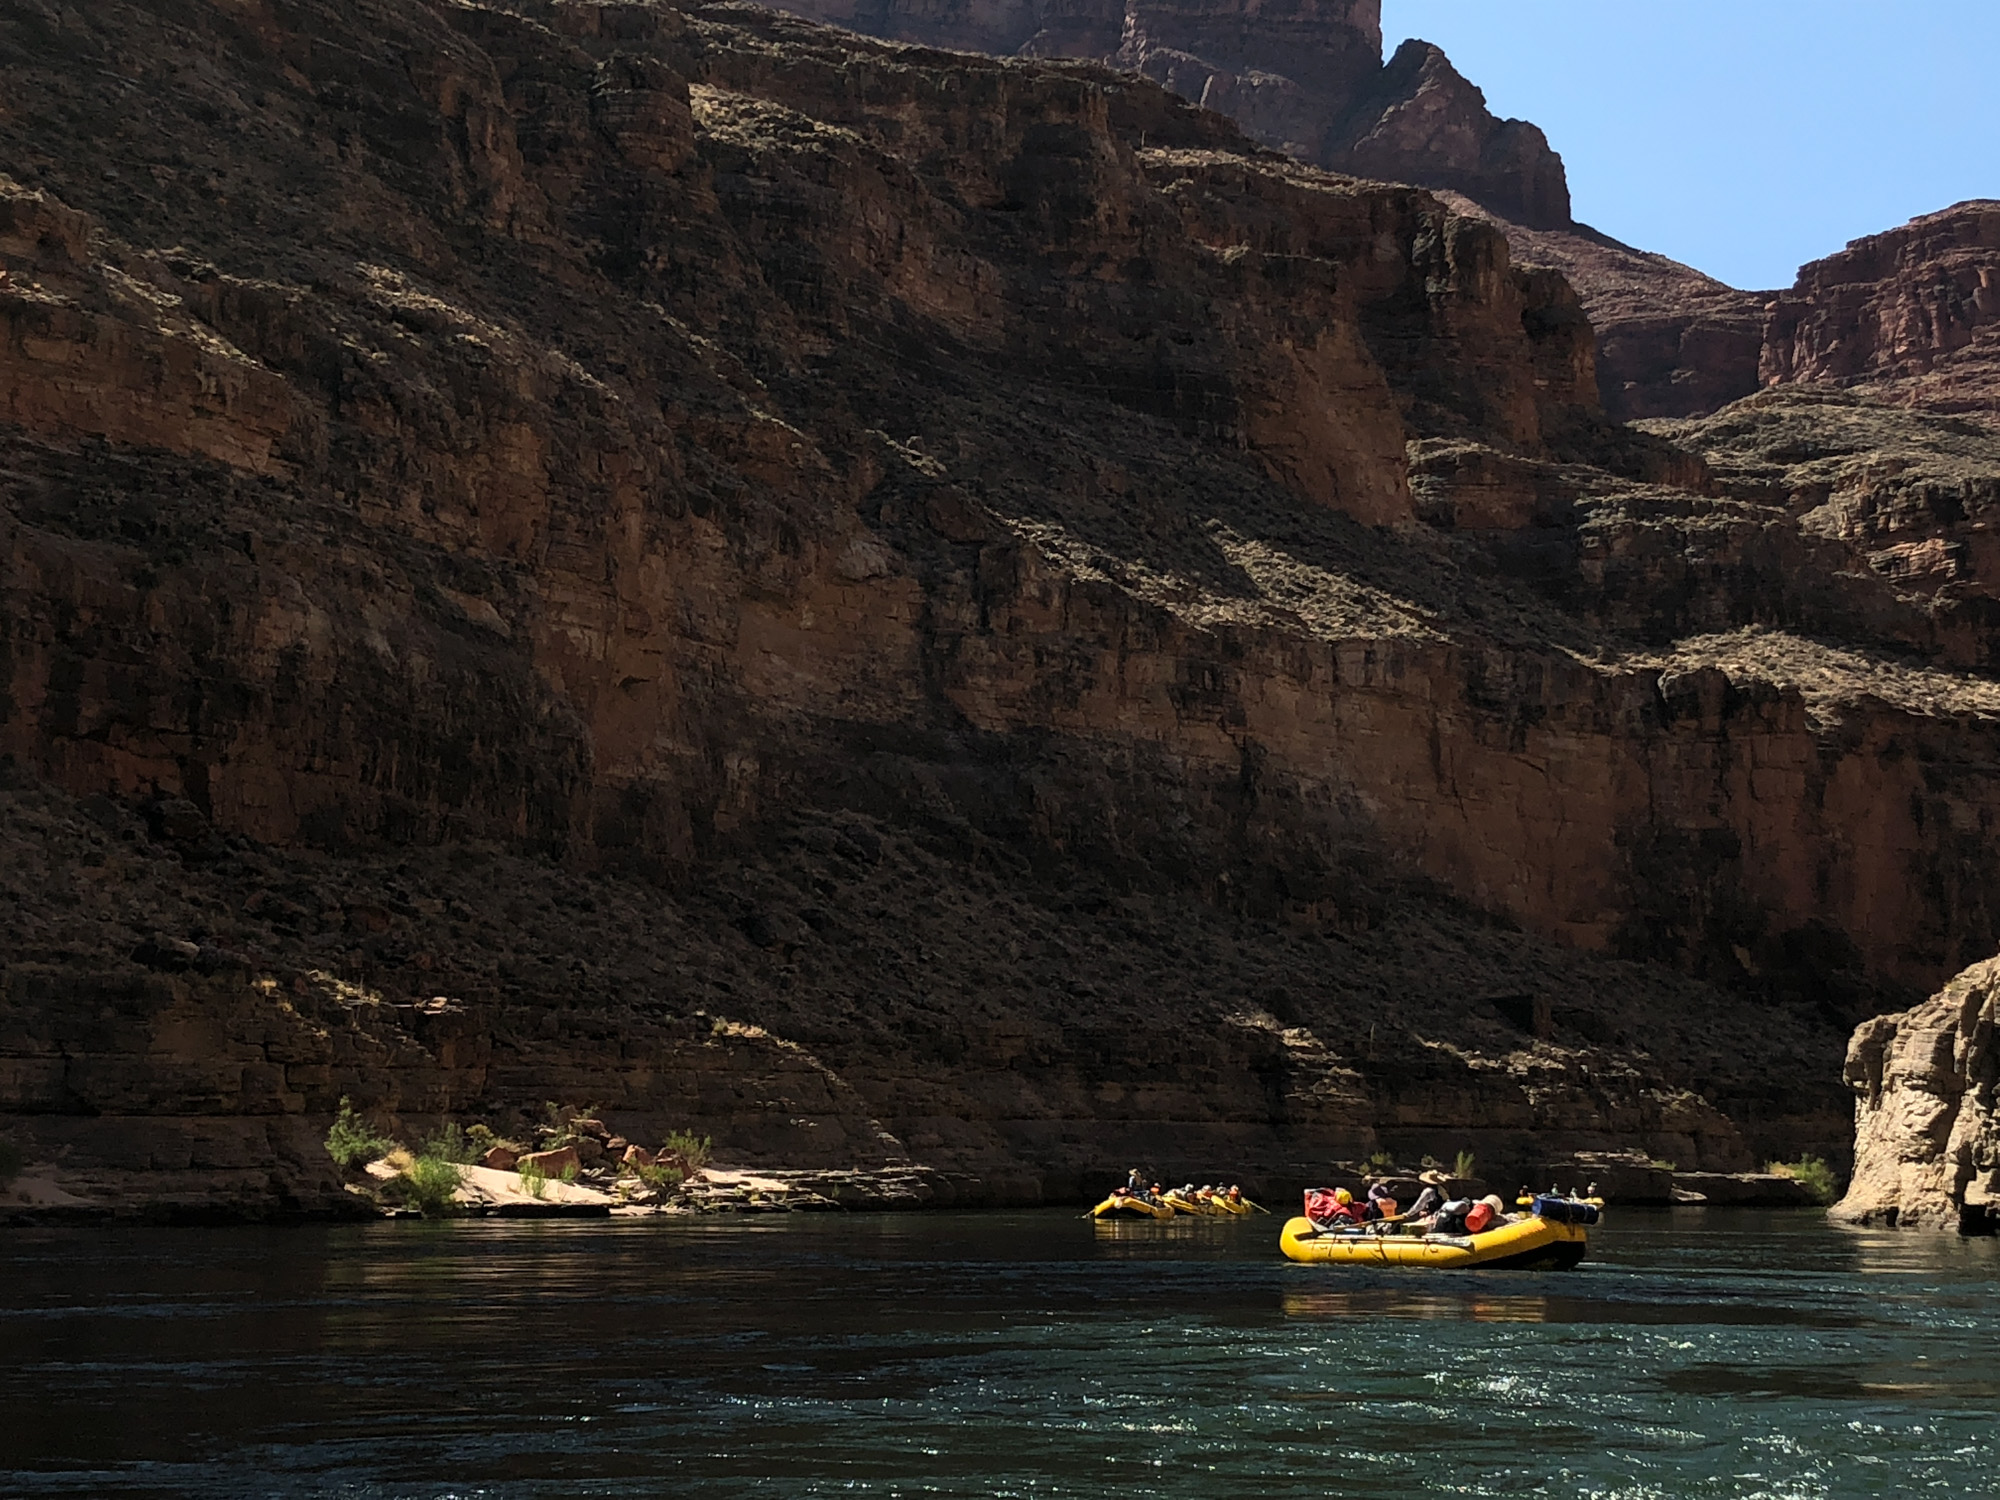  Raft flotilla on the Colorado River 